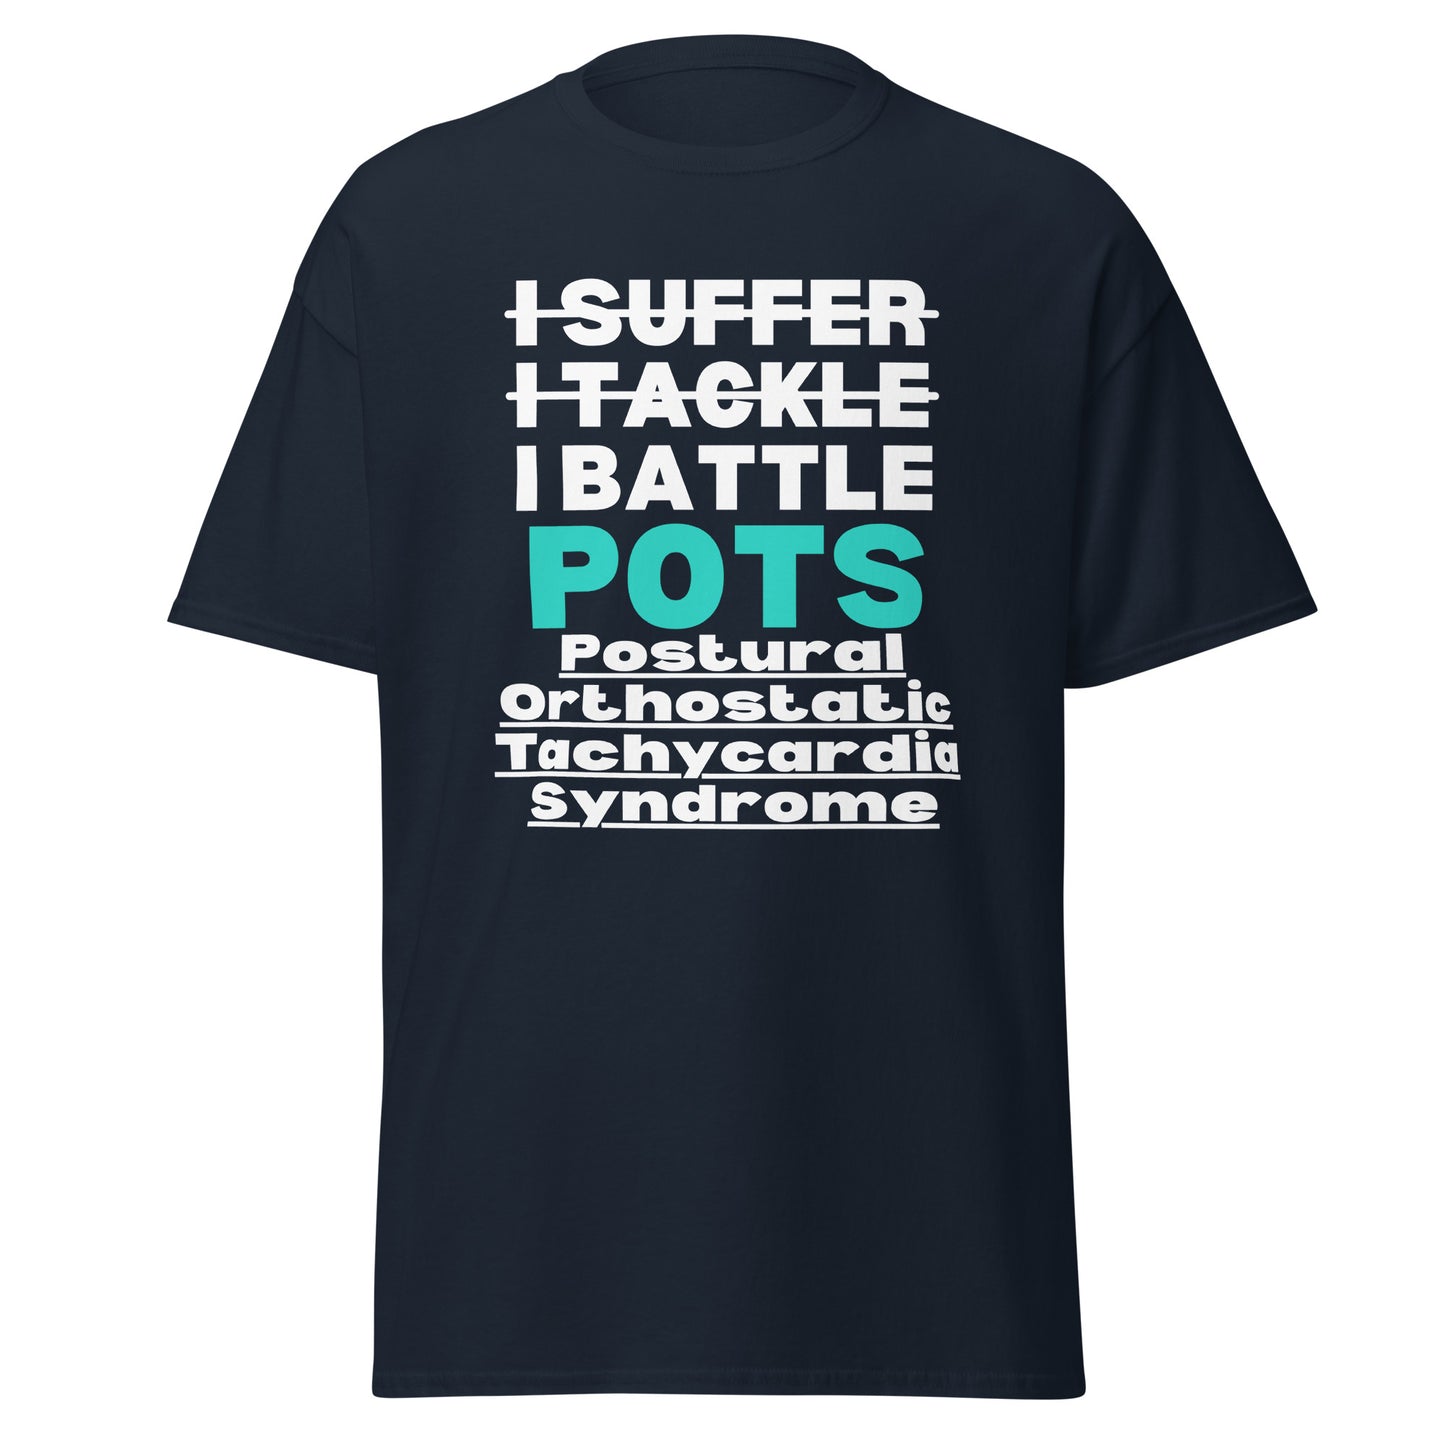 POTS Awareness, Postural orthostatic tachycardia syndrome, POTS warrior, POTS Quote, Pots support, Pots Gift, Pots T-shirt